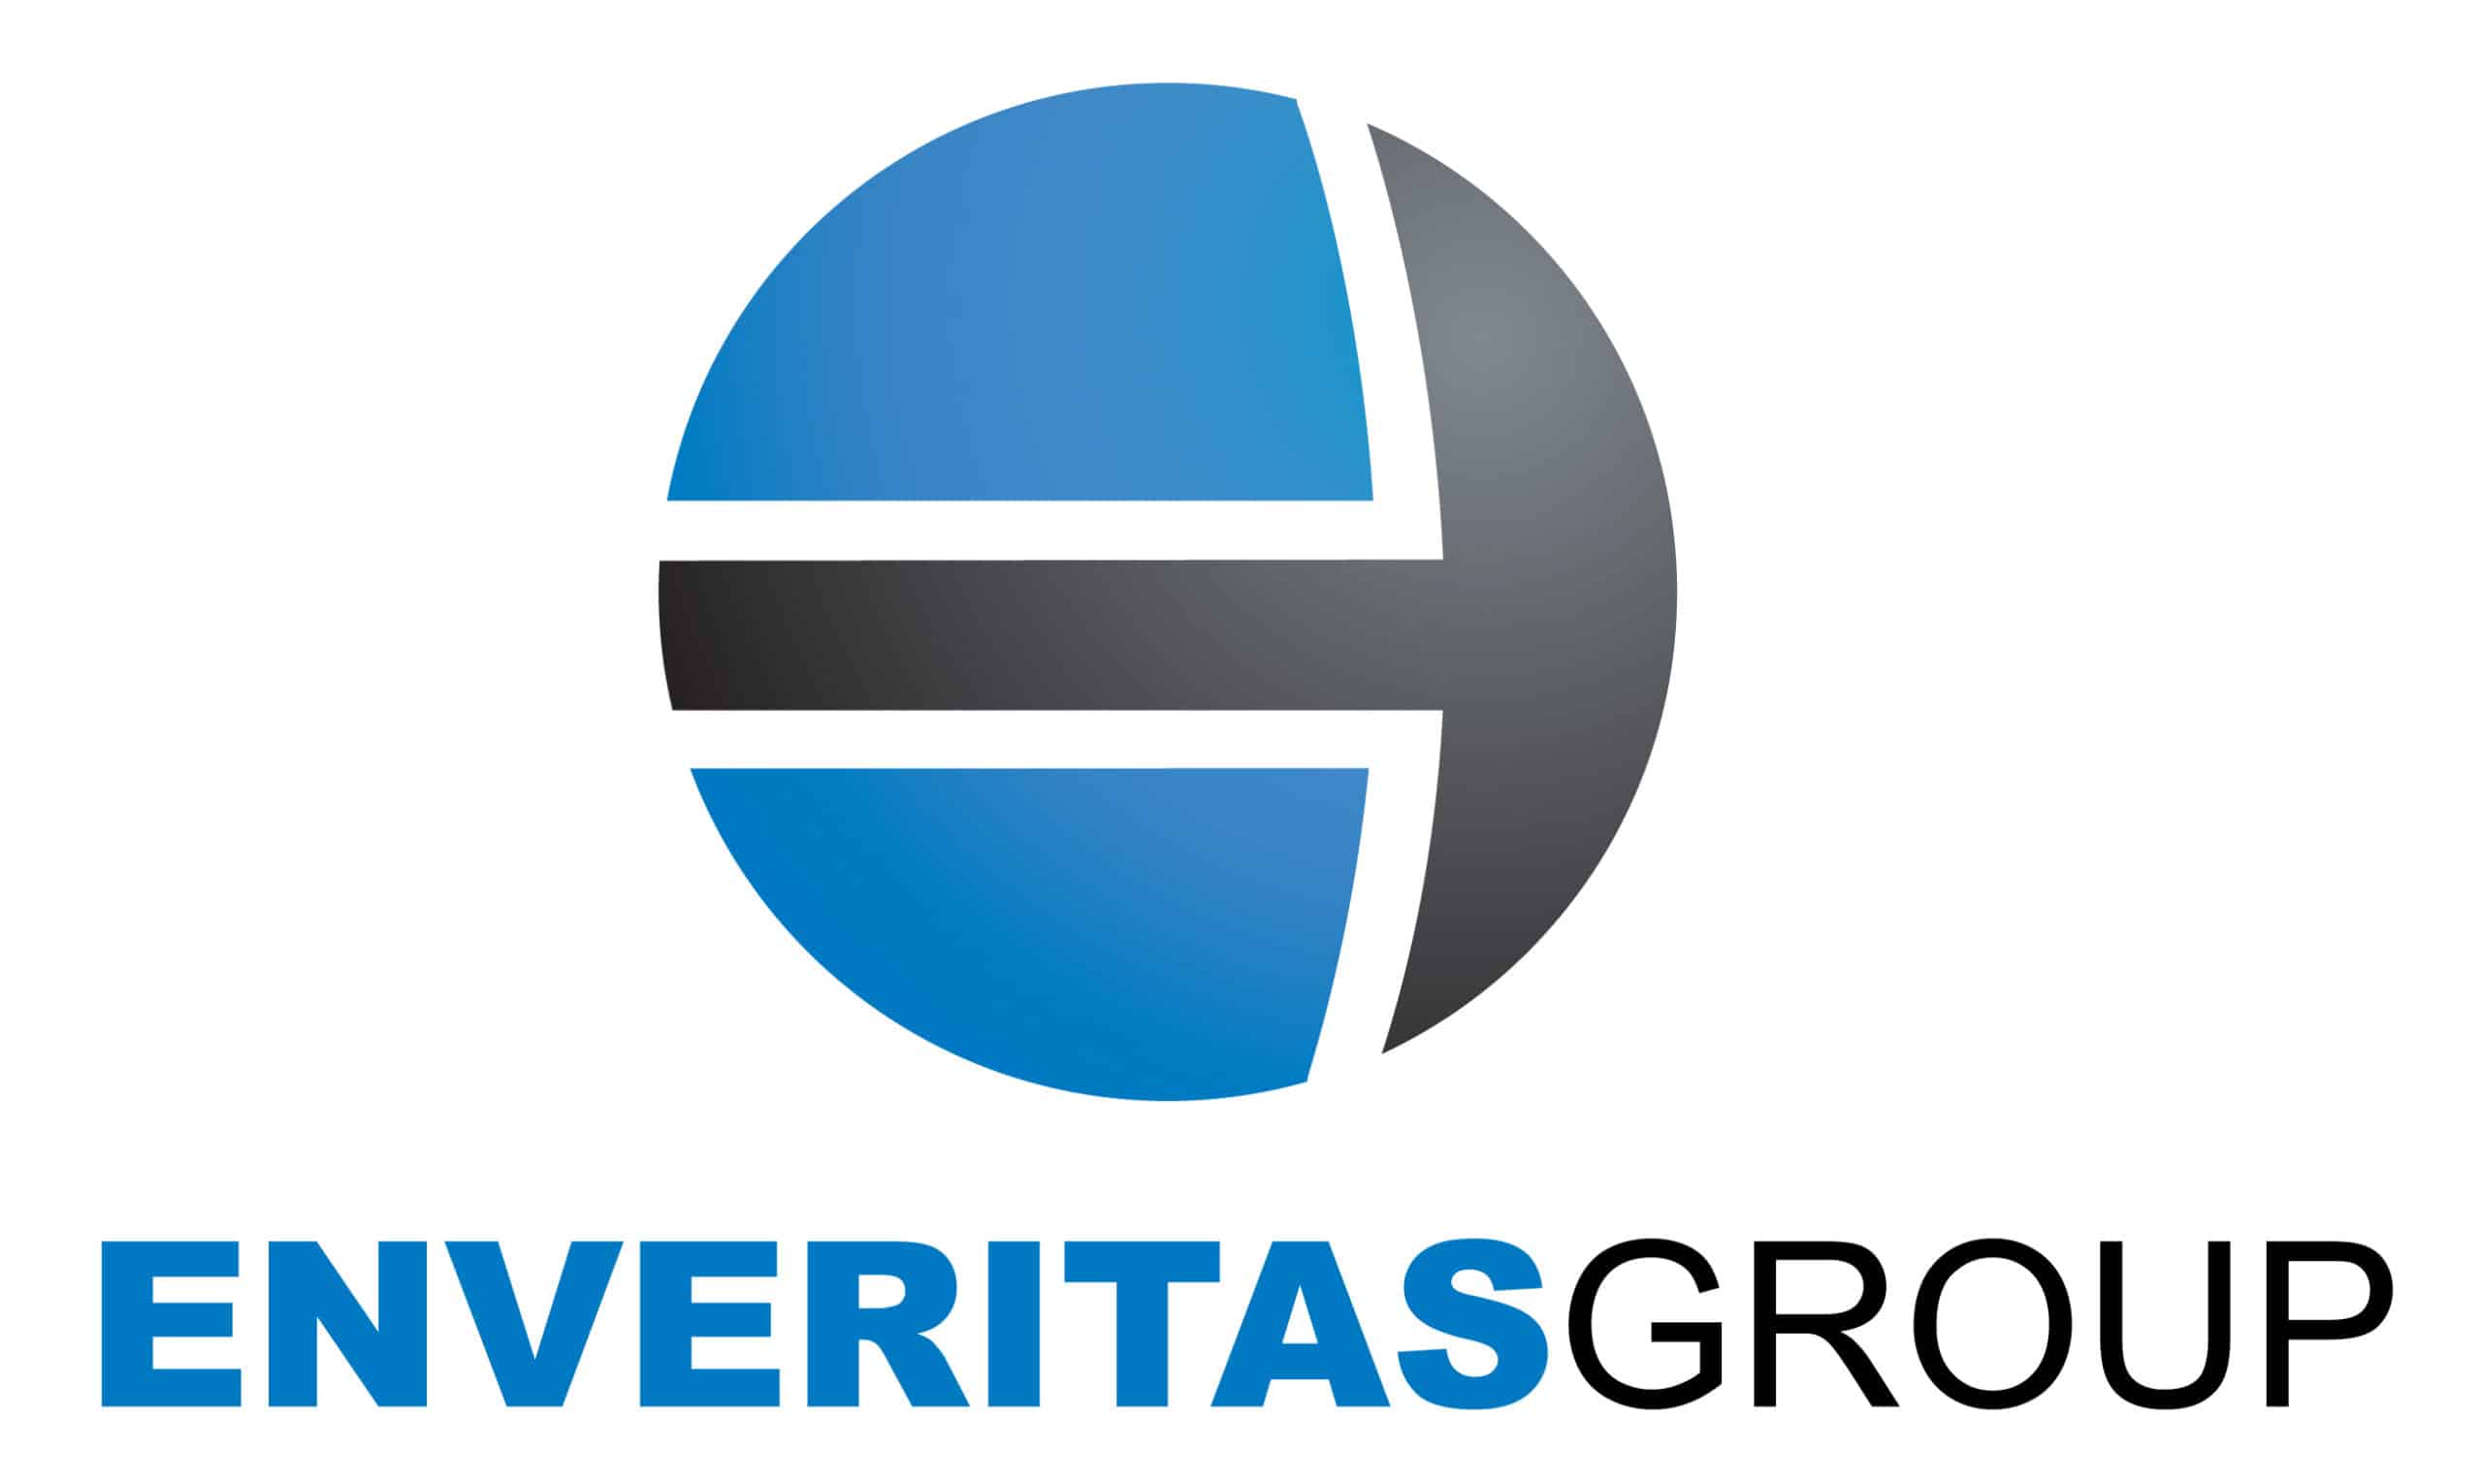 Enveritas Group logo